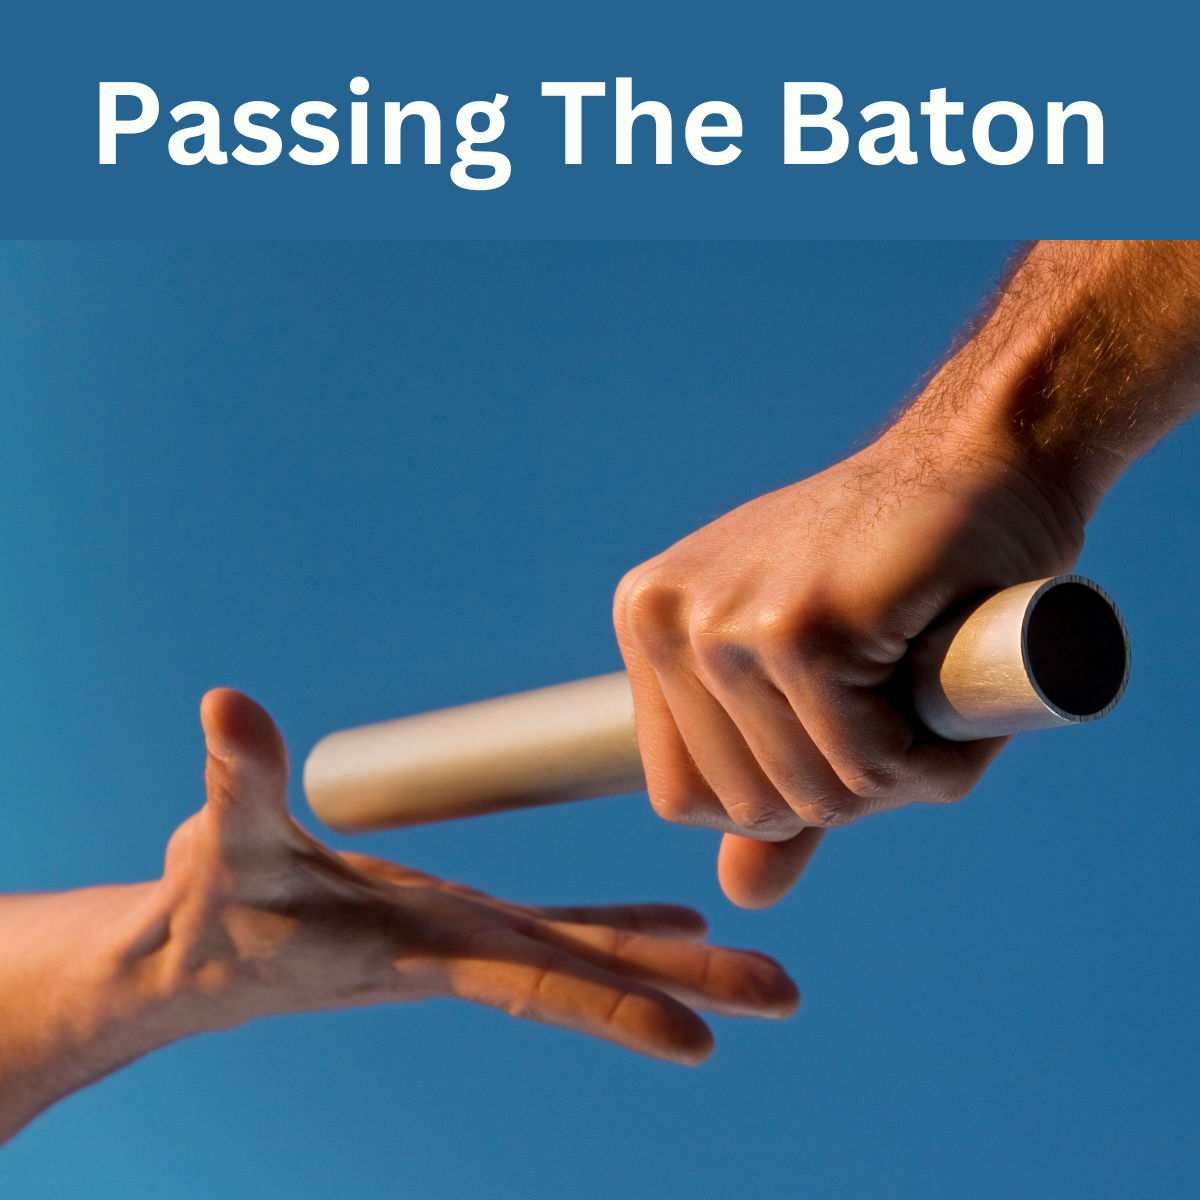 Passing the baton